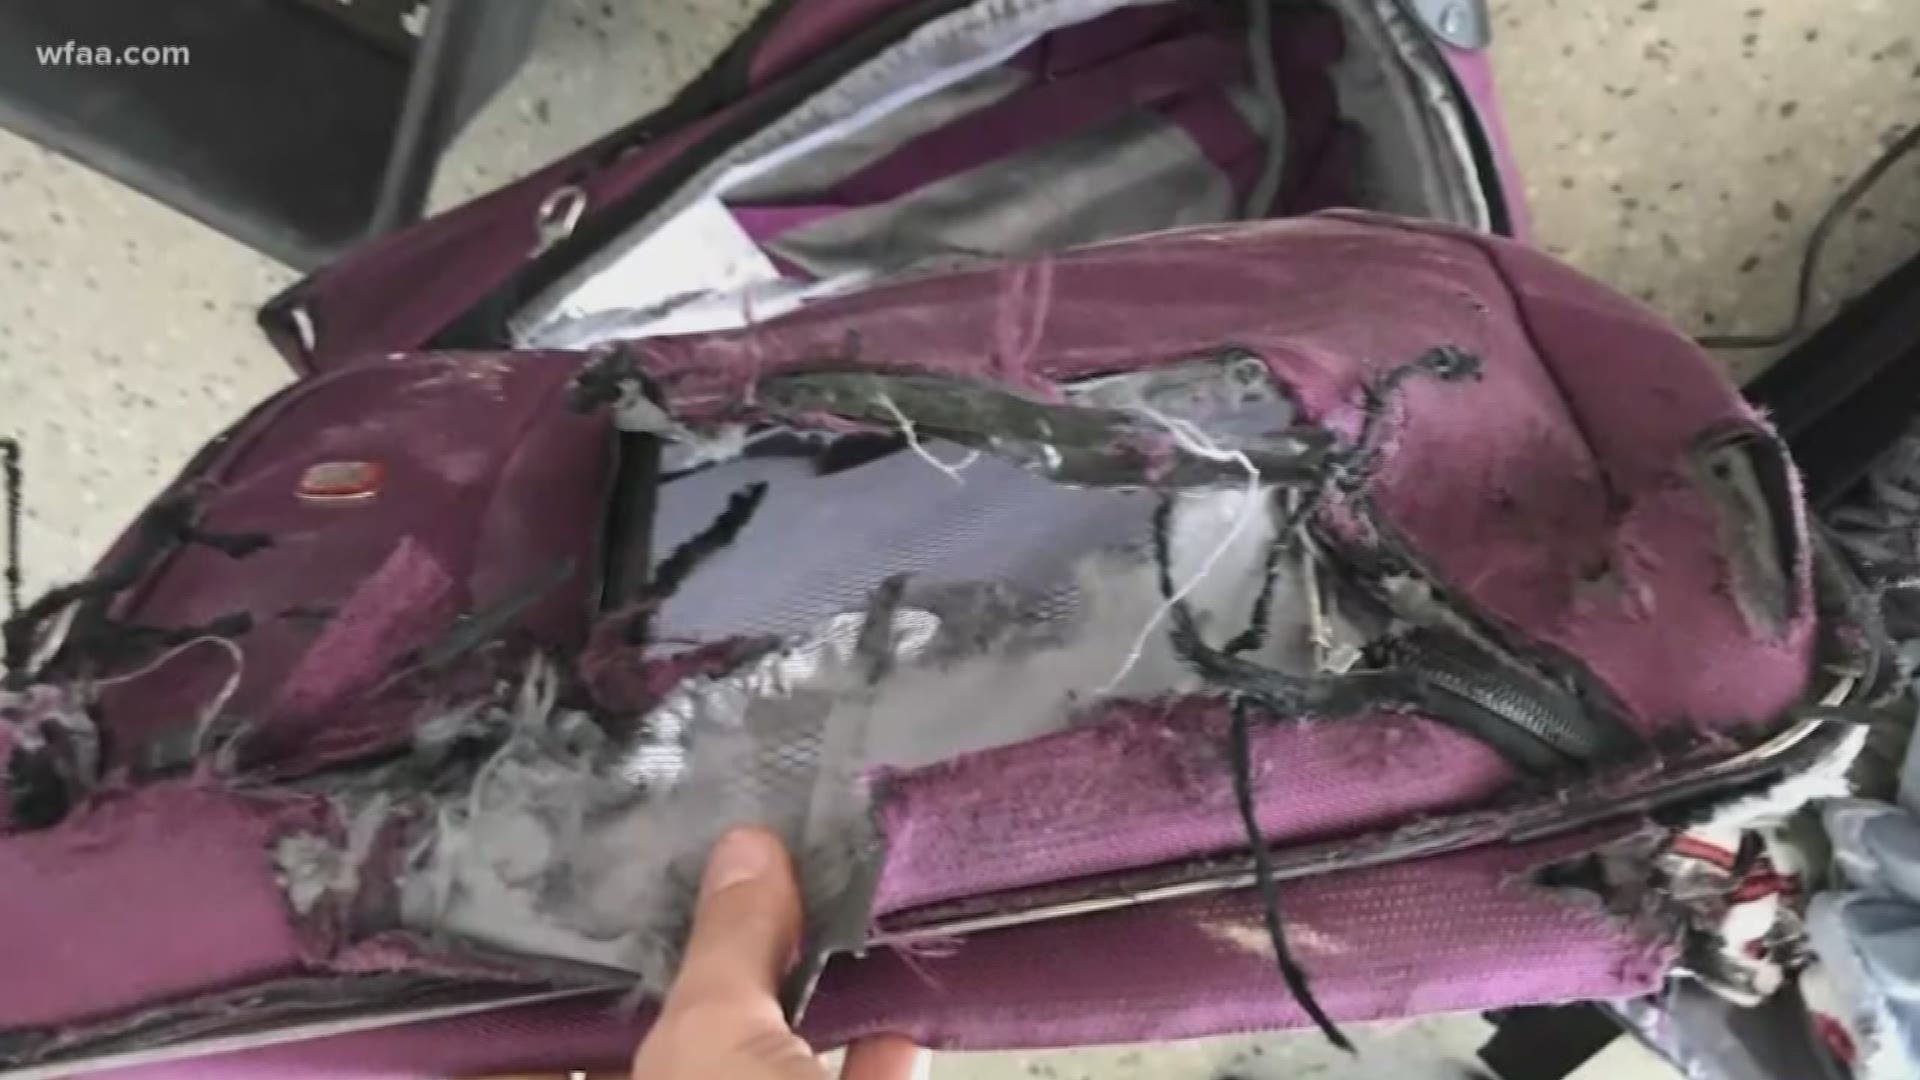 Luggage drama: Woman's suitcase destroyed